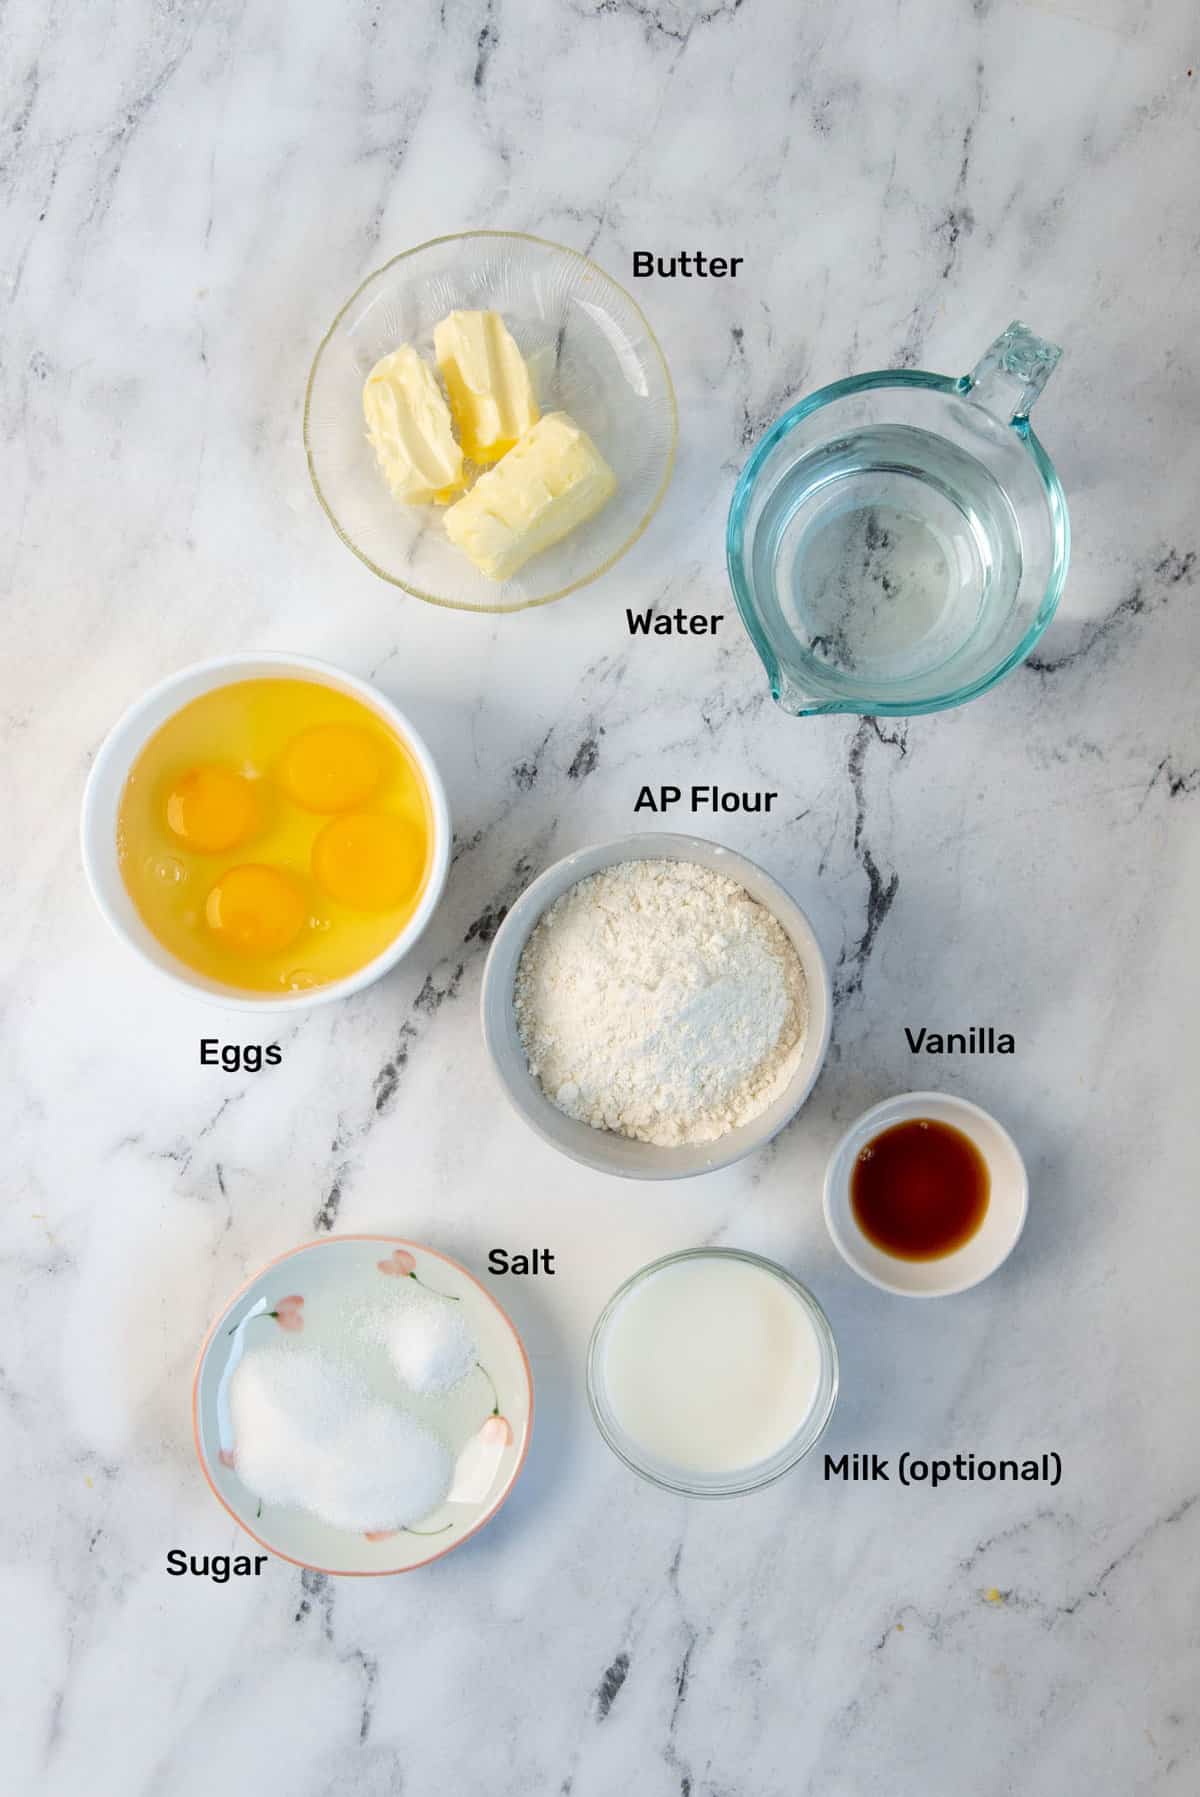 Ingredients to make Praline mousseline cream.